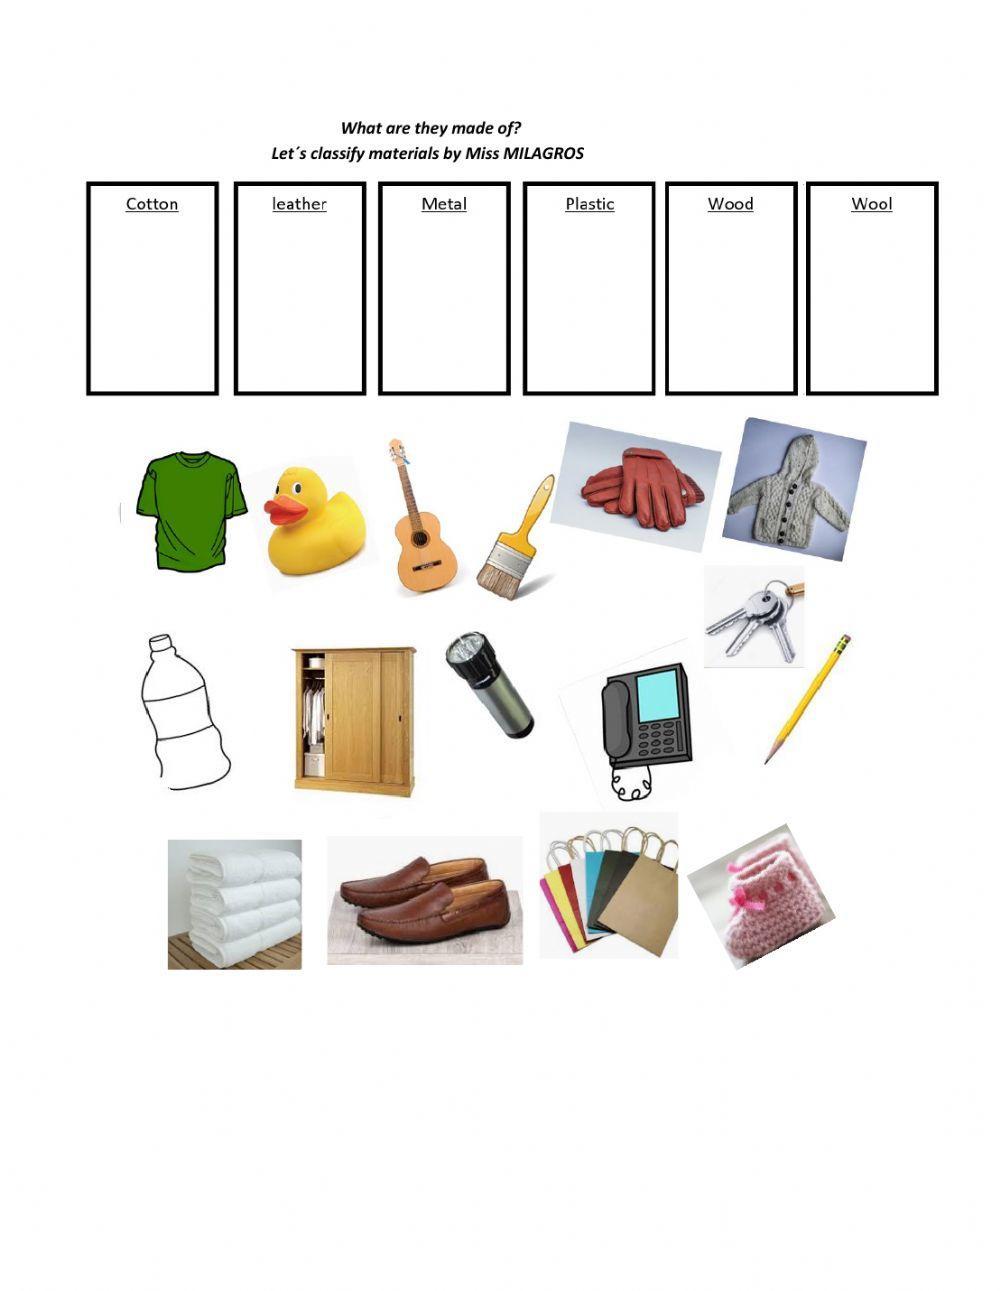 Classifying materials